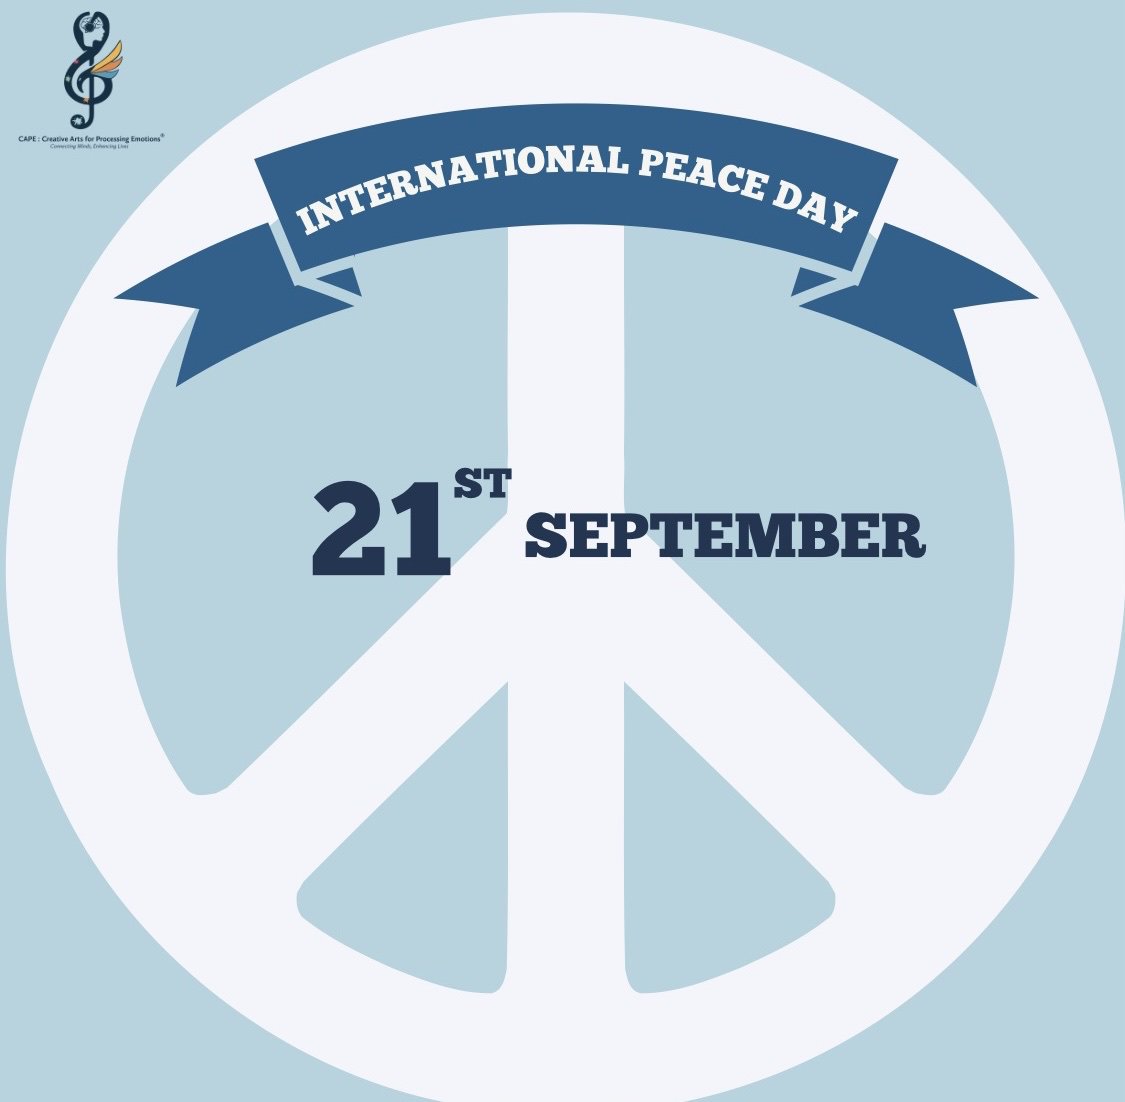 Happy International Peace Day! #mentalhealthawareness #mentalhealthmatters #worldmentalhealthday #mentalhealthrecovery #peace #internationalpeaceday